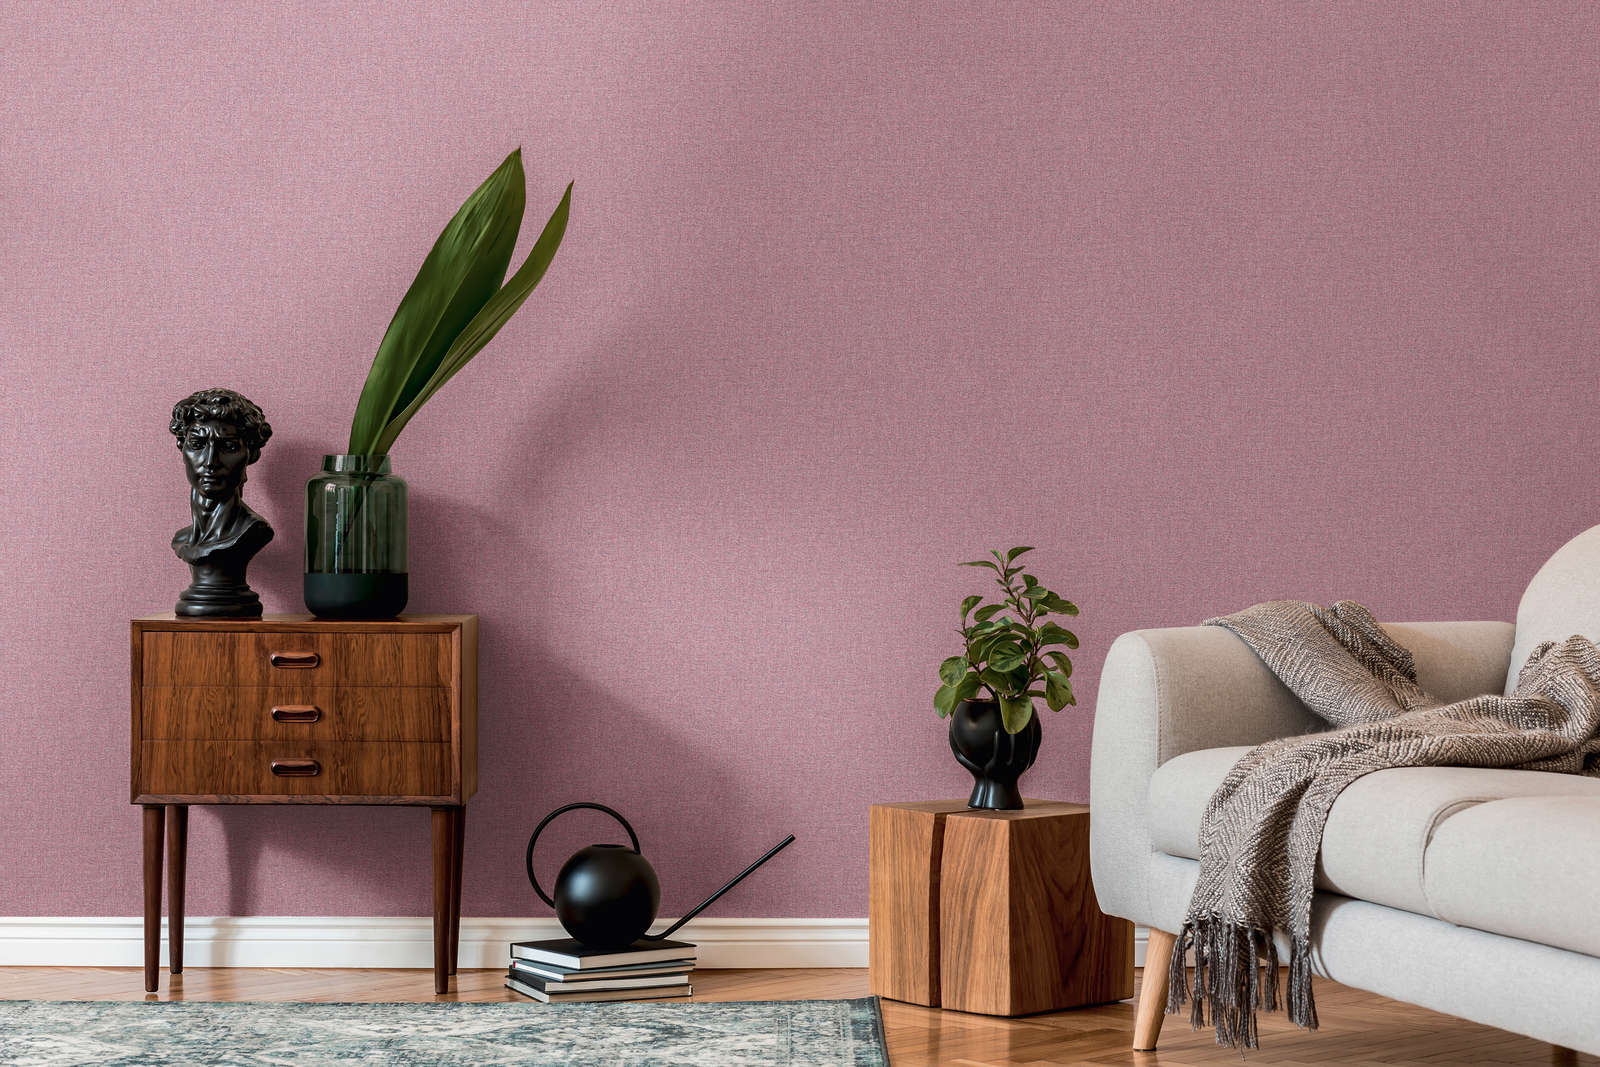             Non-woven wallpaper with fabric structure plain, matt - violet, pink
        